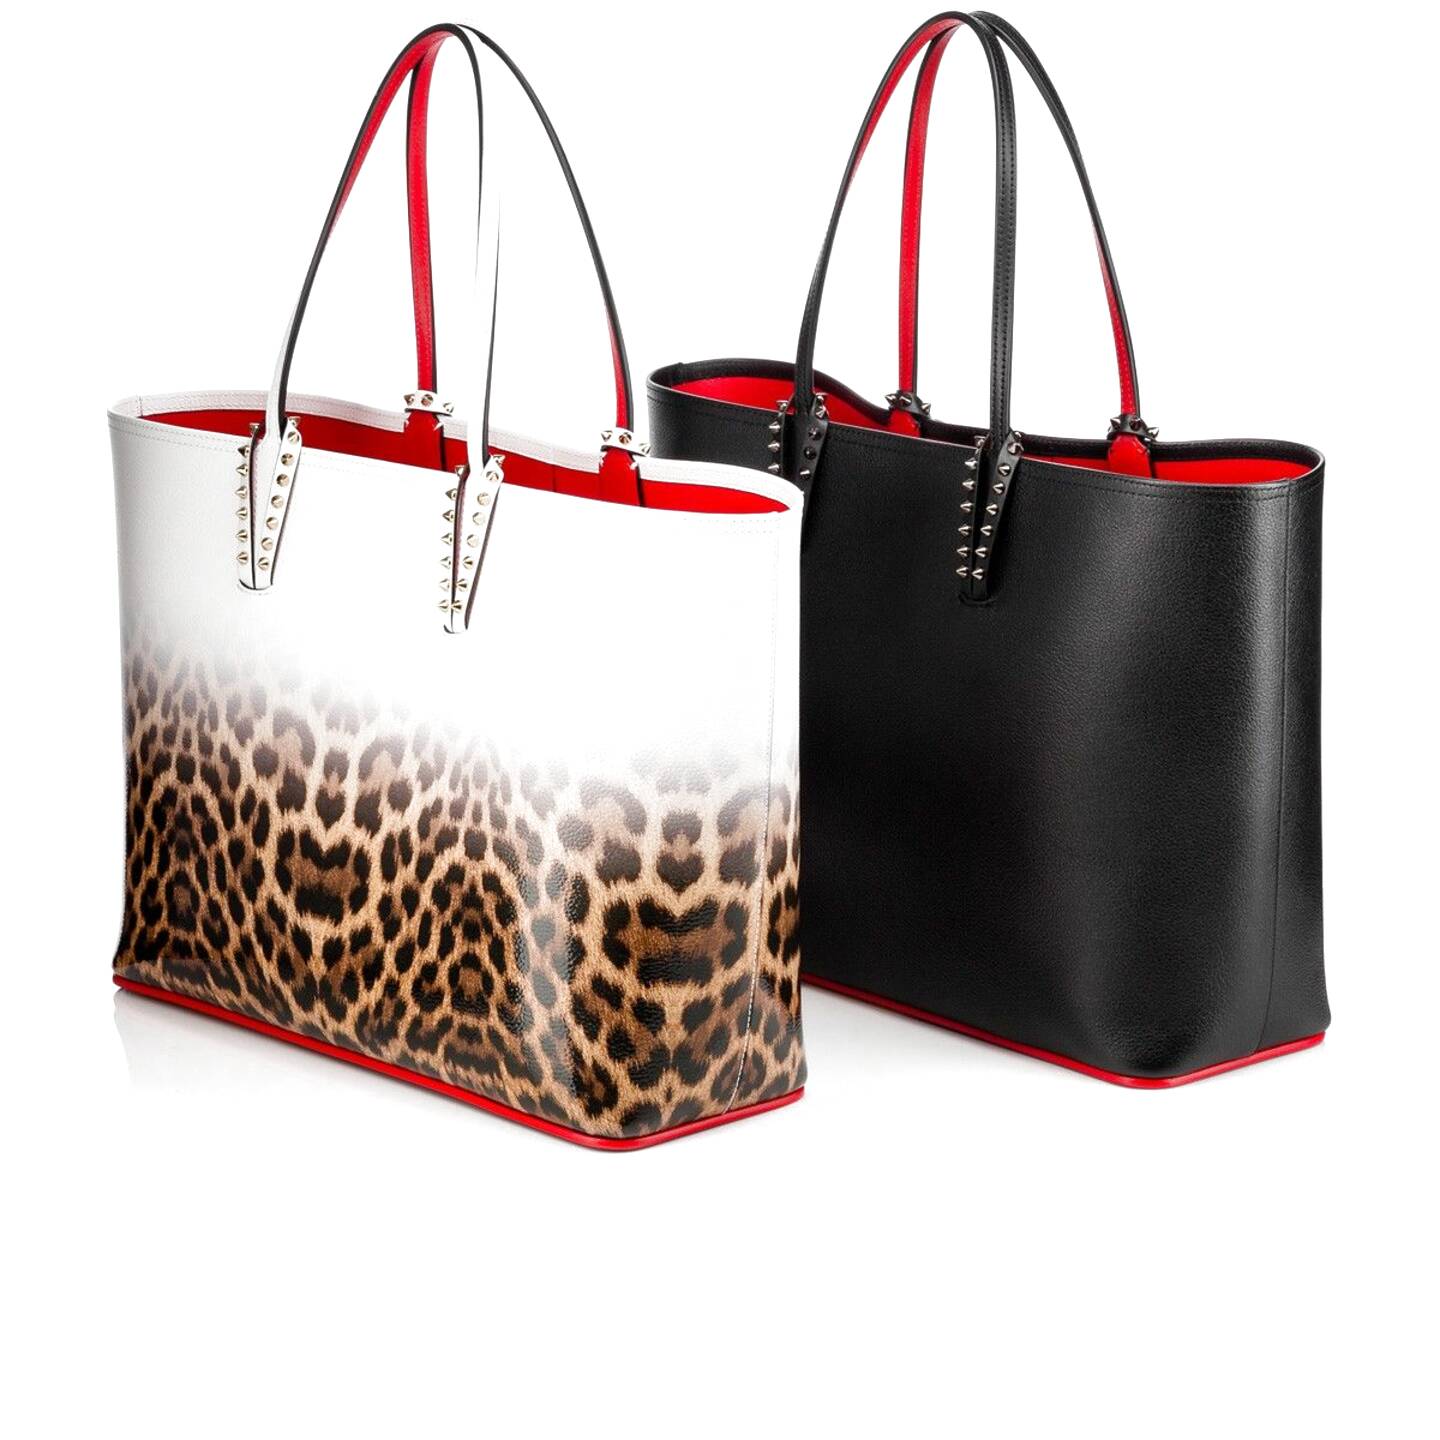 Christian Louboutin Handbag for sale in UK | View 58 ads